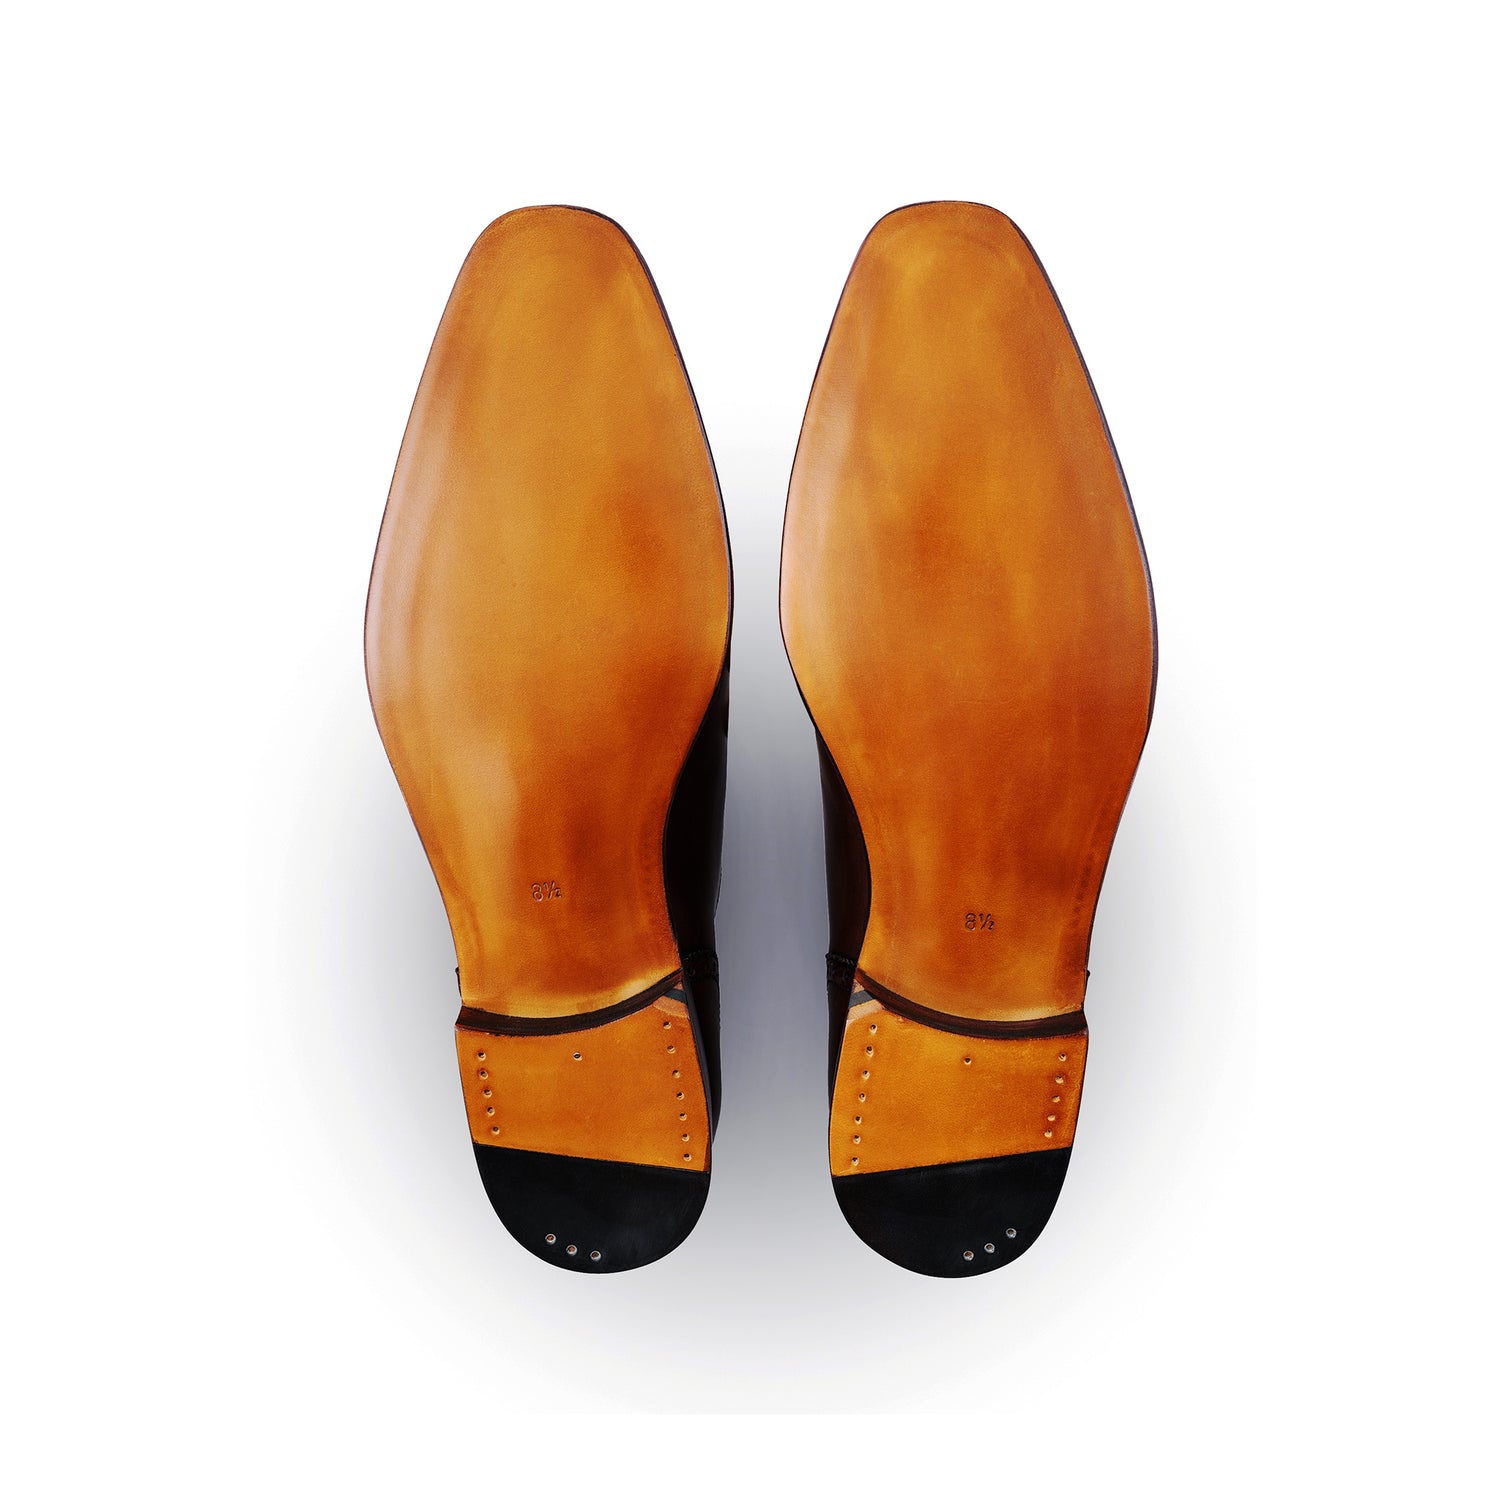 TLB Mallorca leather shoes 502 / ALAN / BOXCALF BLACK